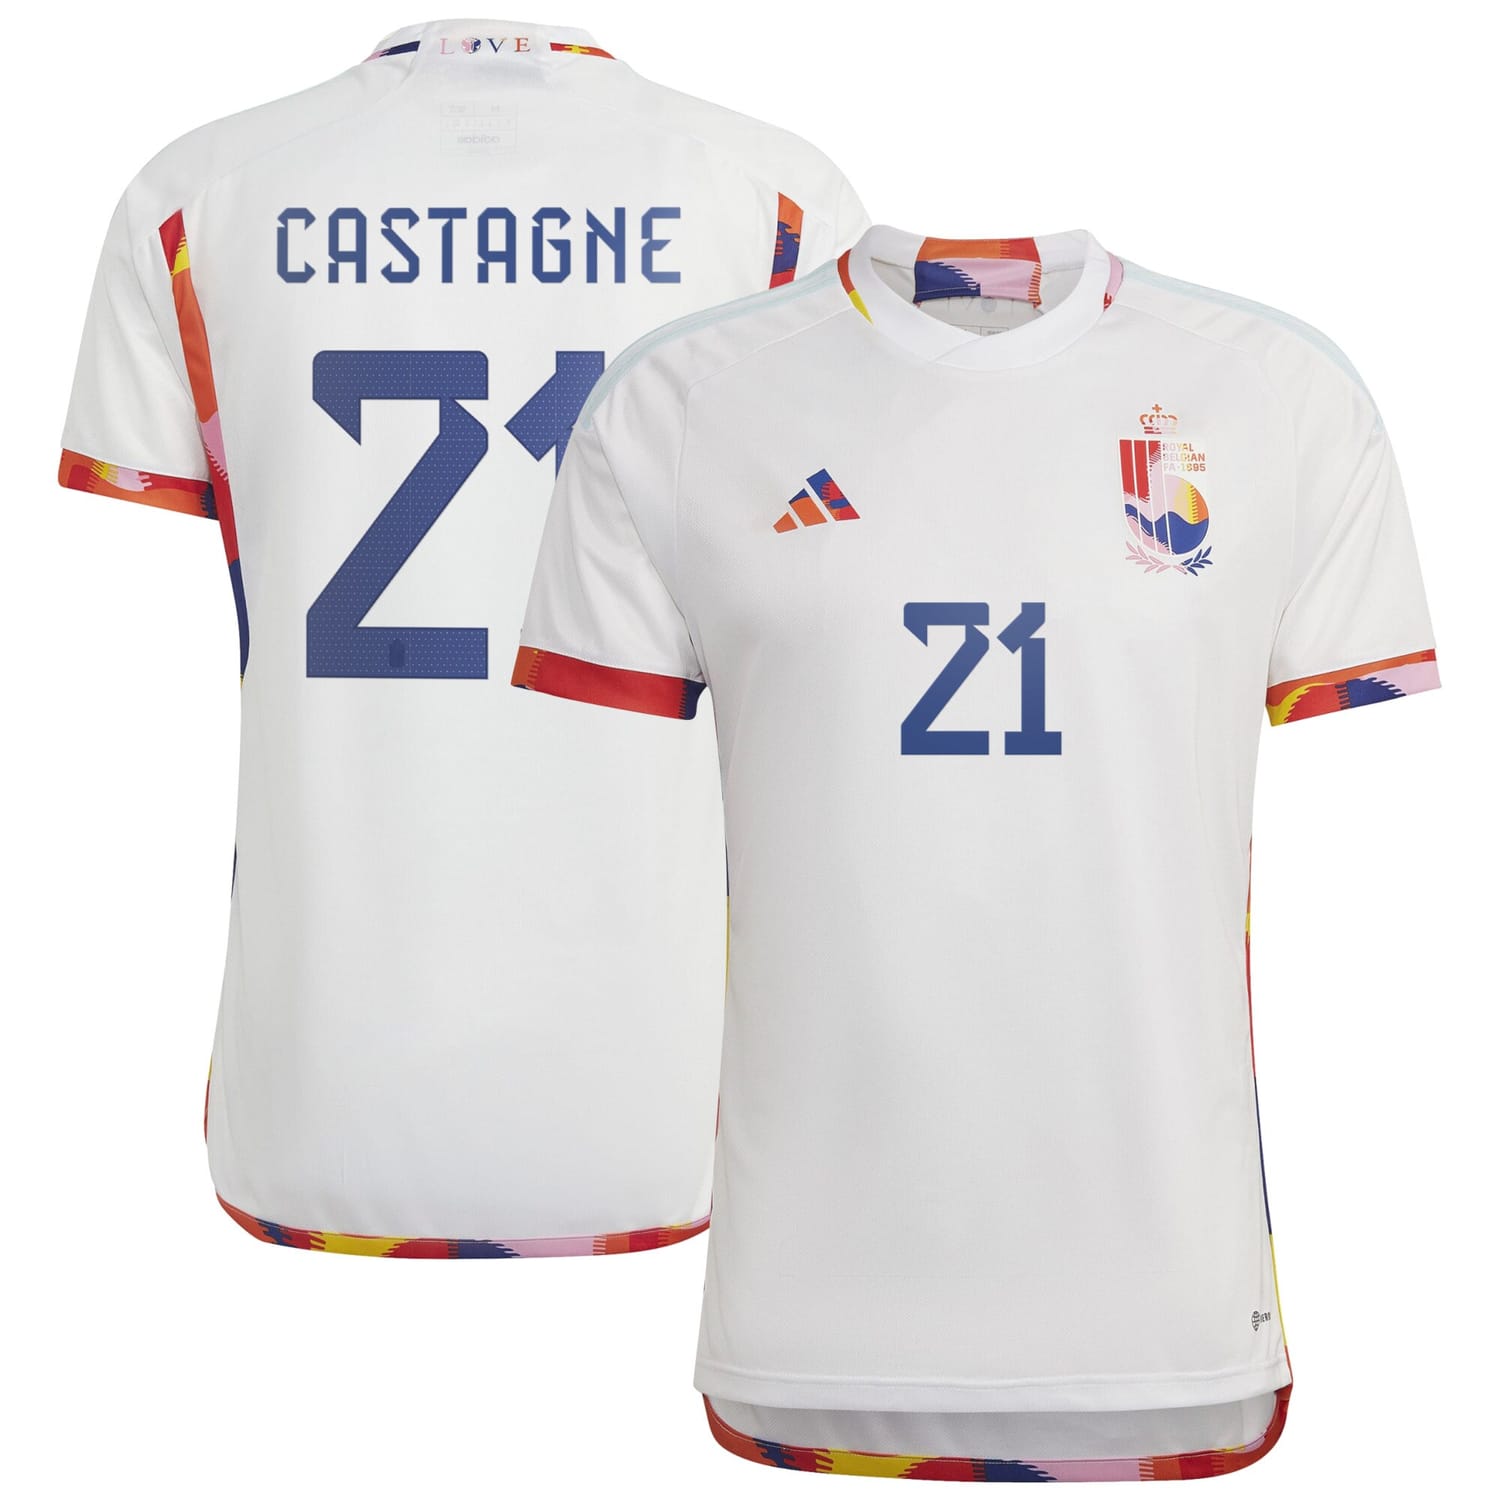 Belgium National Team Away Jersey Shirt 2022 player Timothy Castagne 21 printing for Men